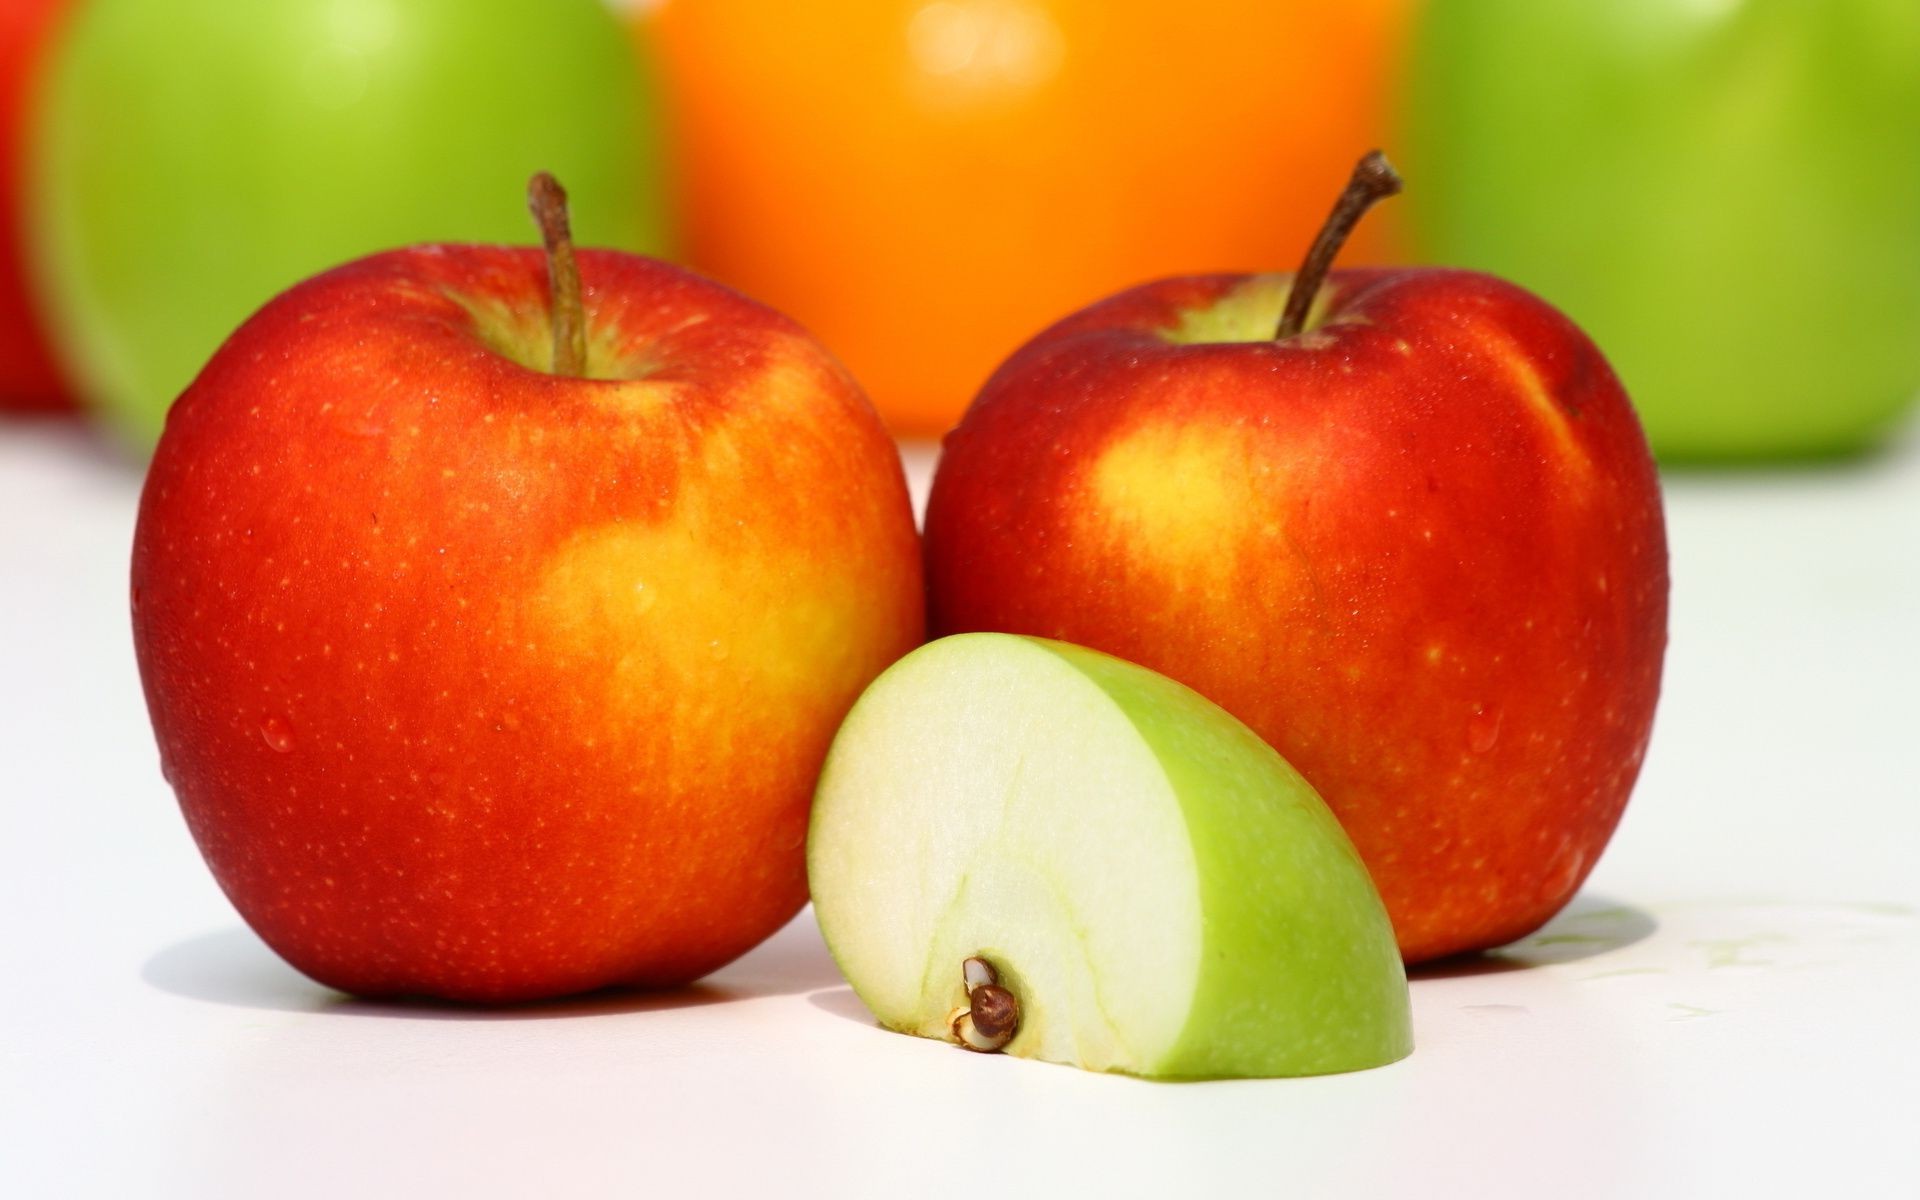 fruit apple food juicy health delicious nutrition grow agriculture juice confection healthy vitamin